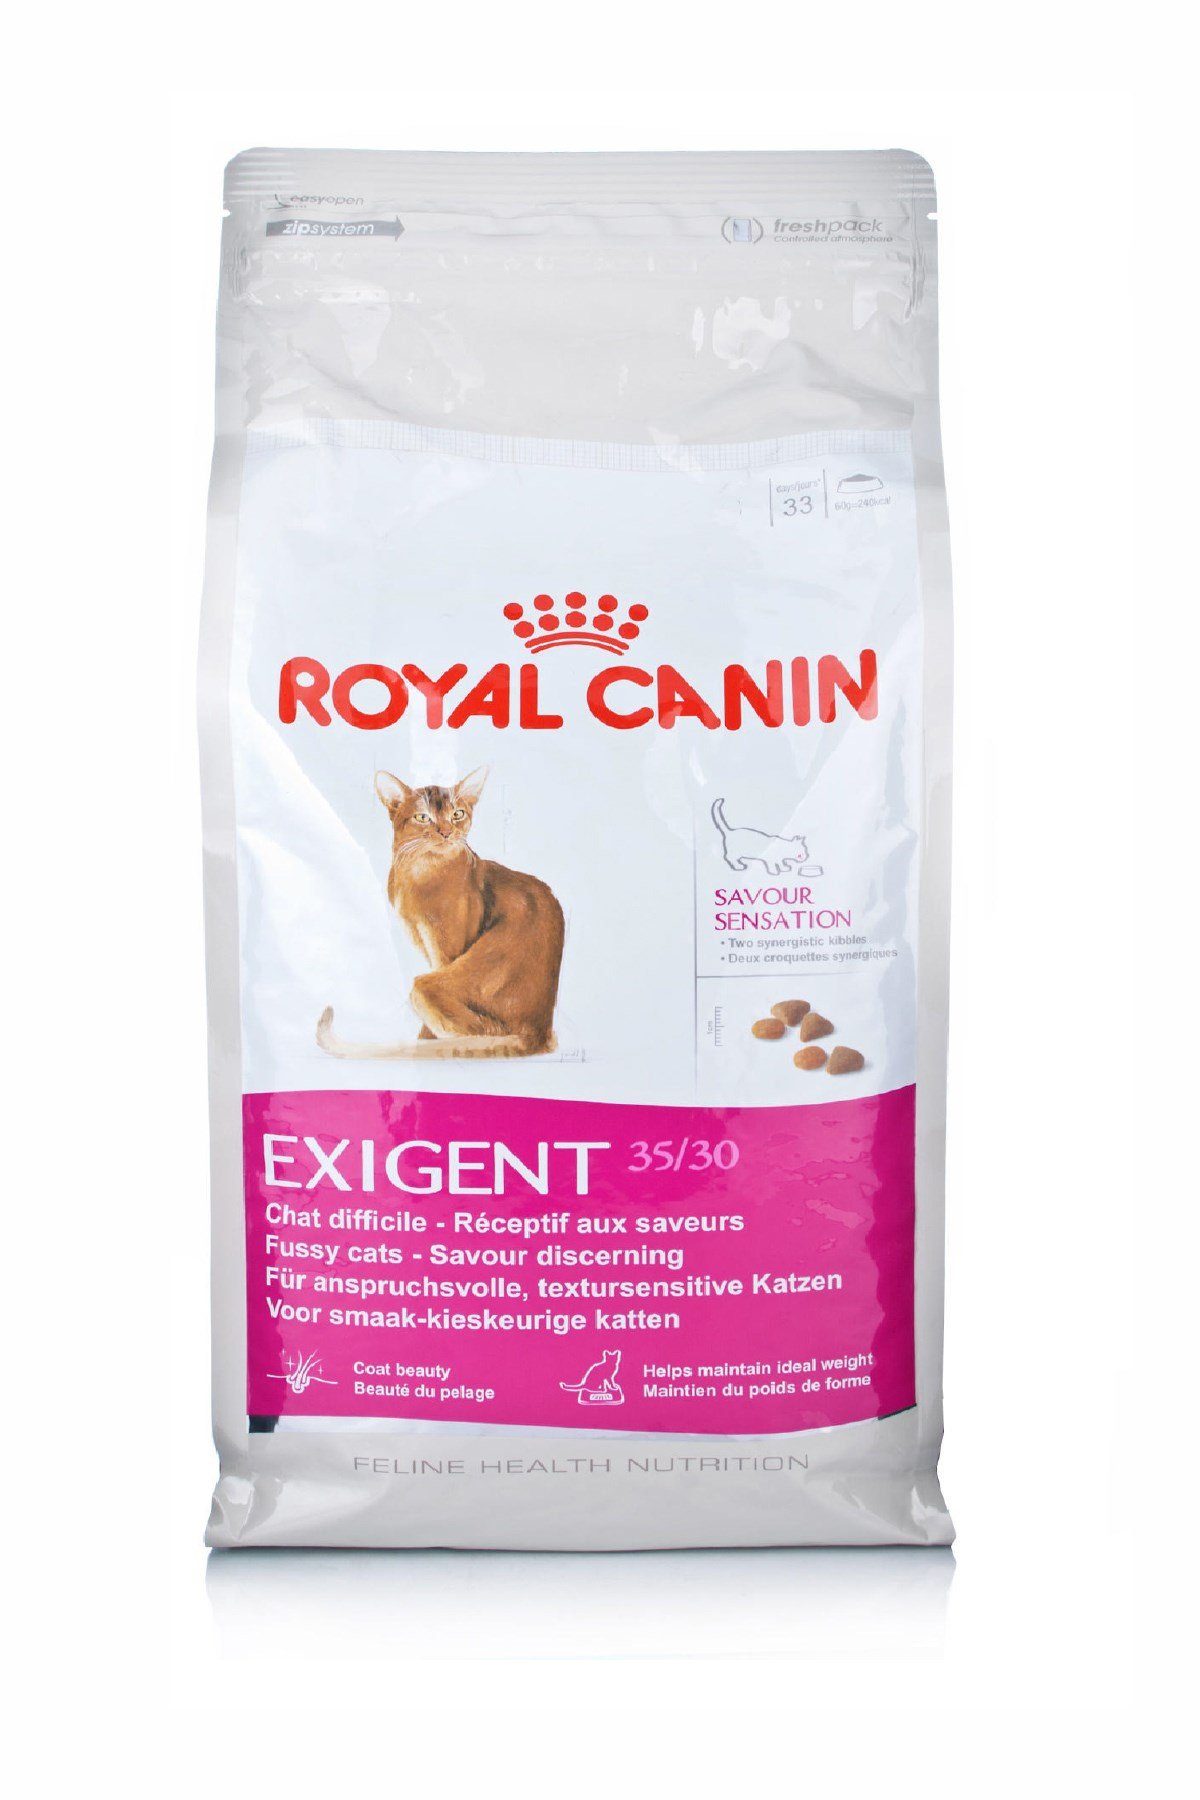 Royal Canin Exigent Savour Kuru Kedi Maması 10 Kg